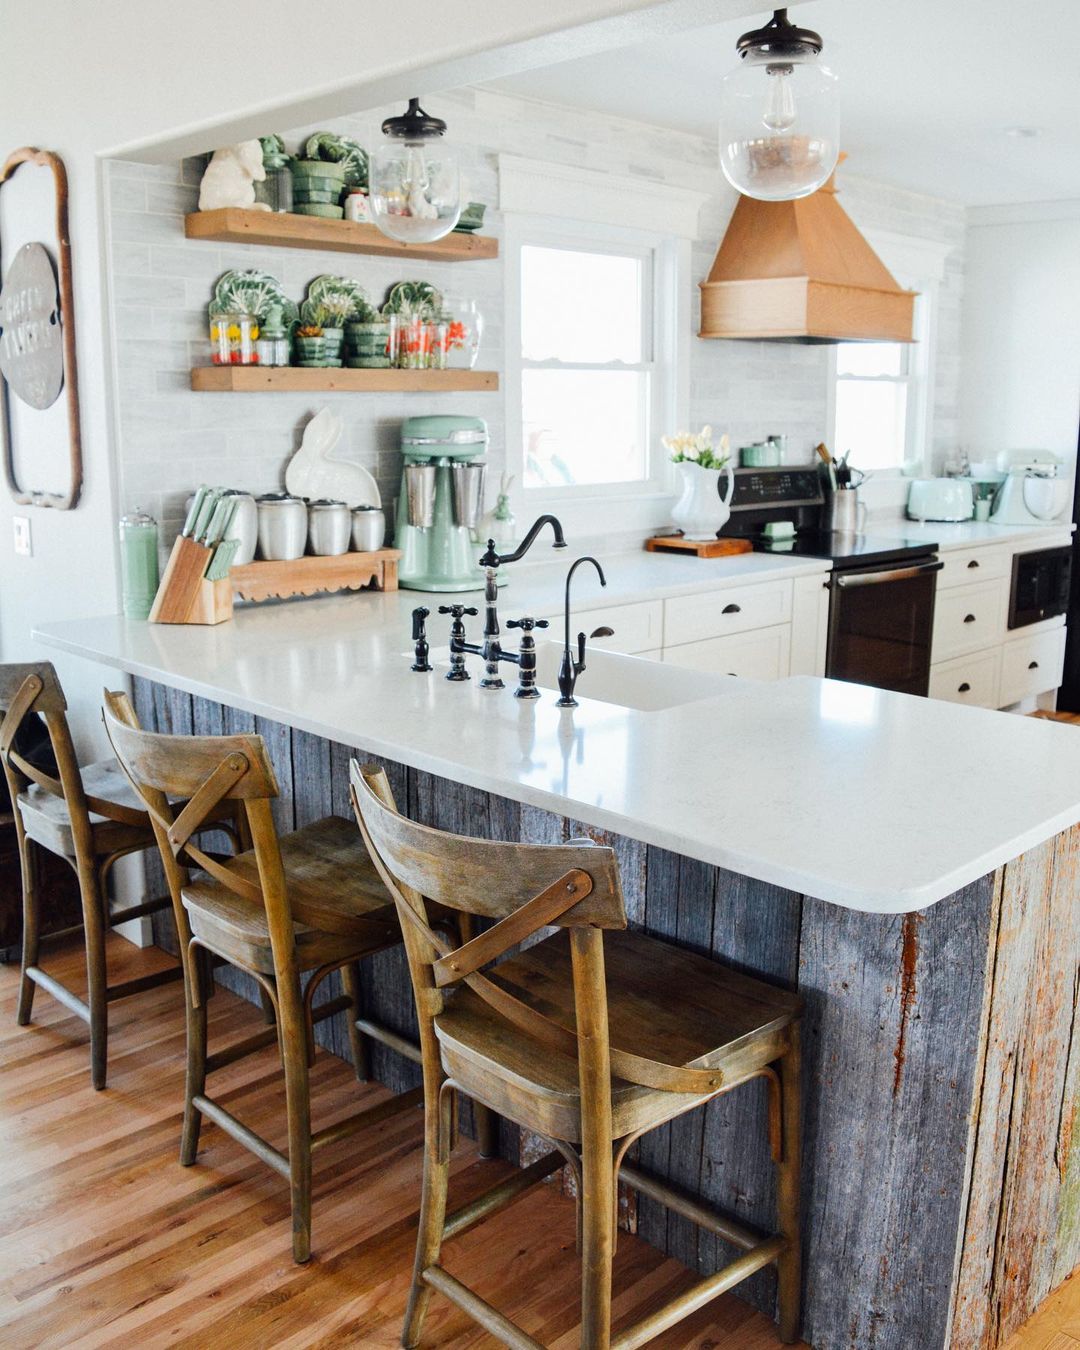 Farmhouse Kitchen with Reclaimed Wooden Bar Stools. Photo by Instagram user @thevettelfarm